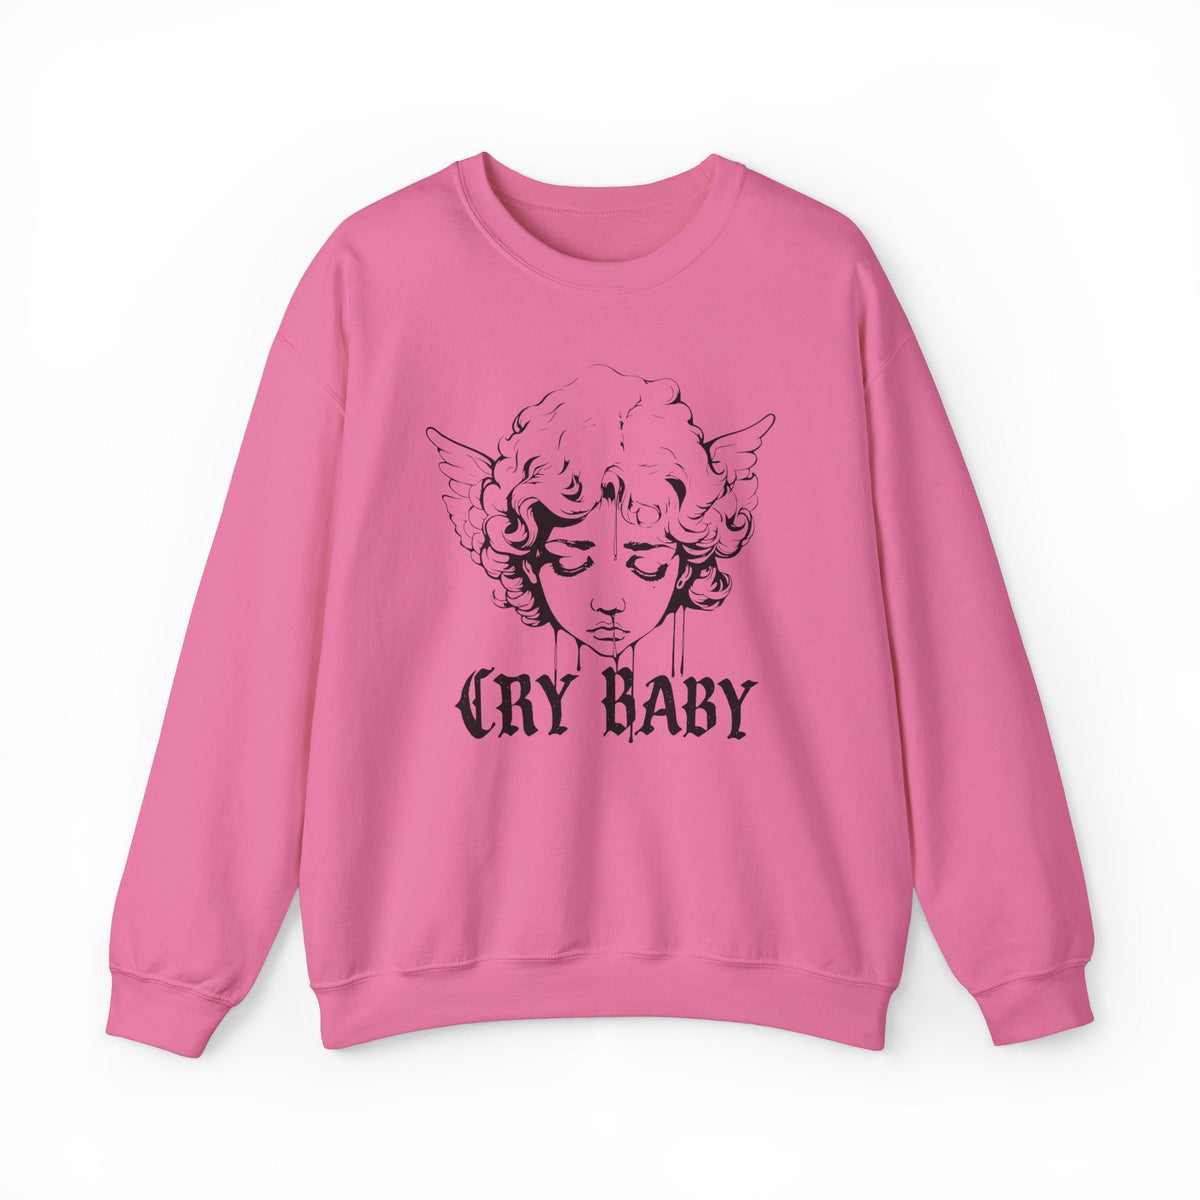 Crybaby Graffiti Cherub Crew Neck Sweatshirt - Goth Cloth Co.Sweatshirt25431306226640275890